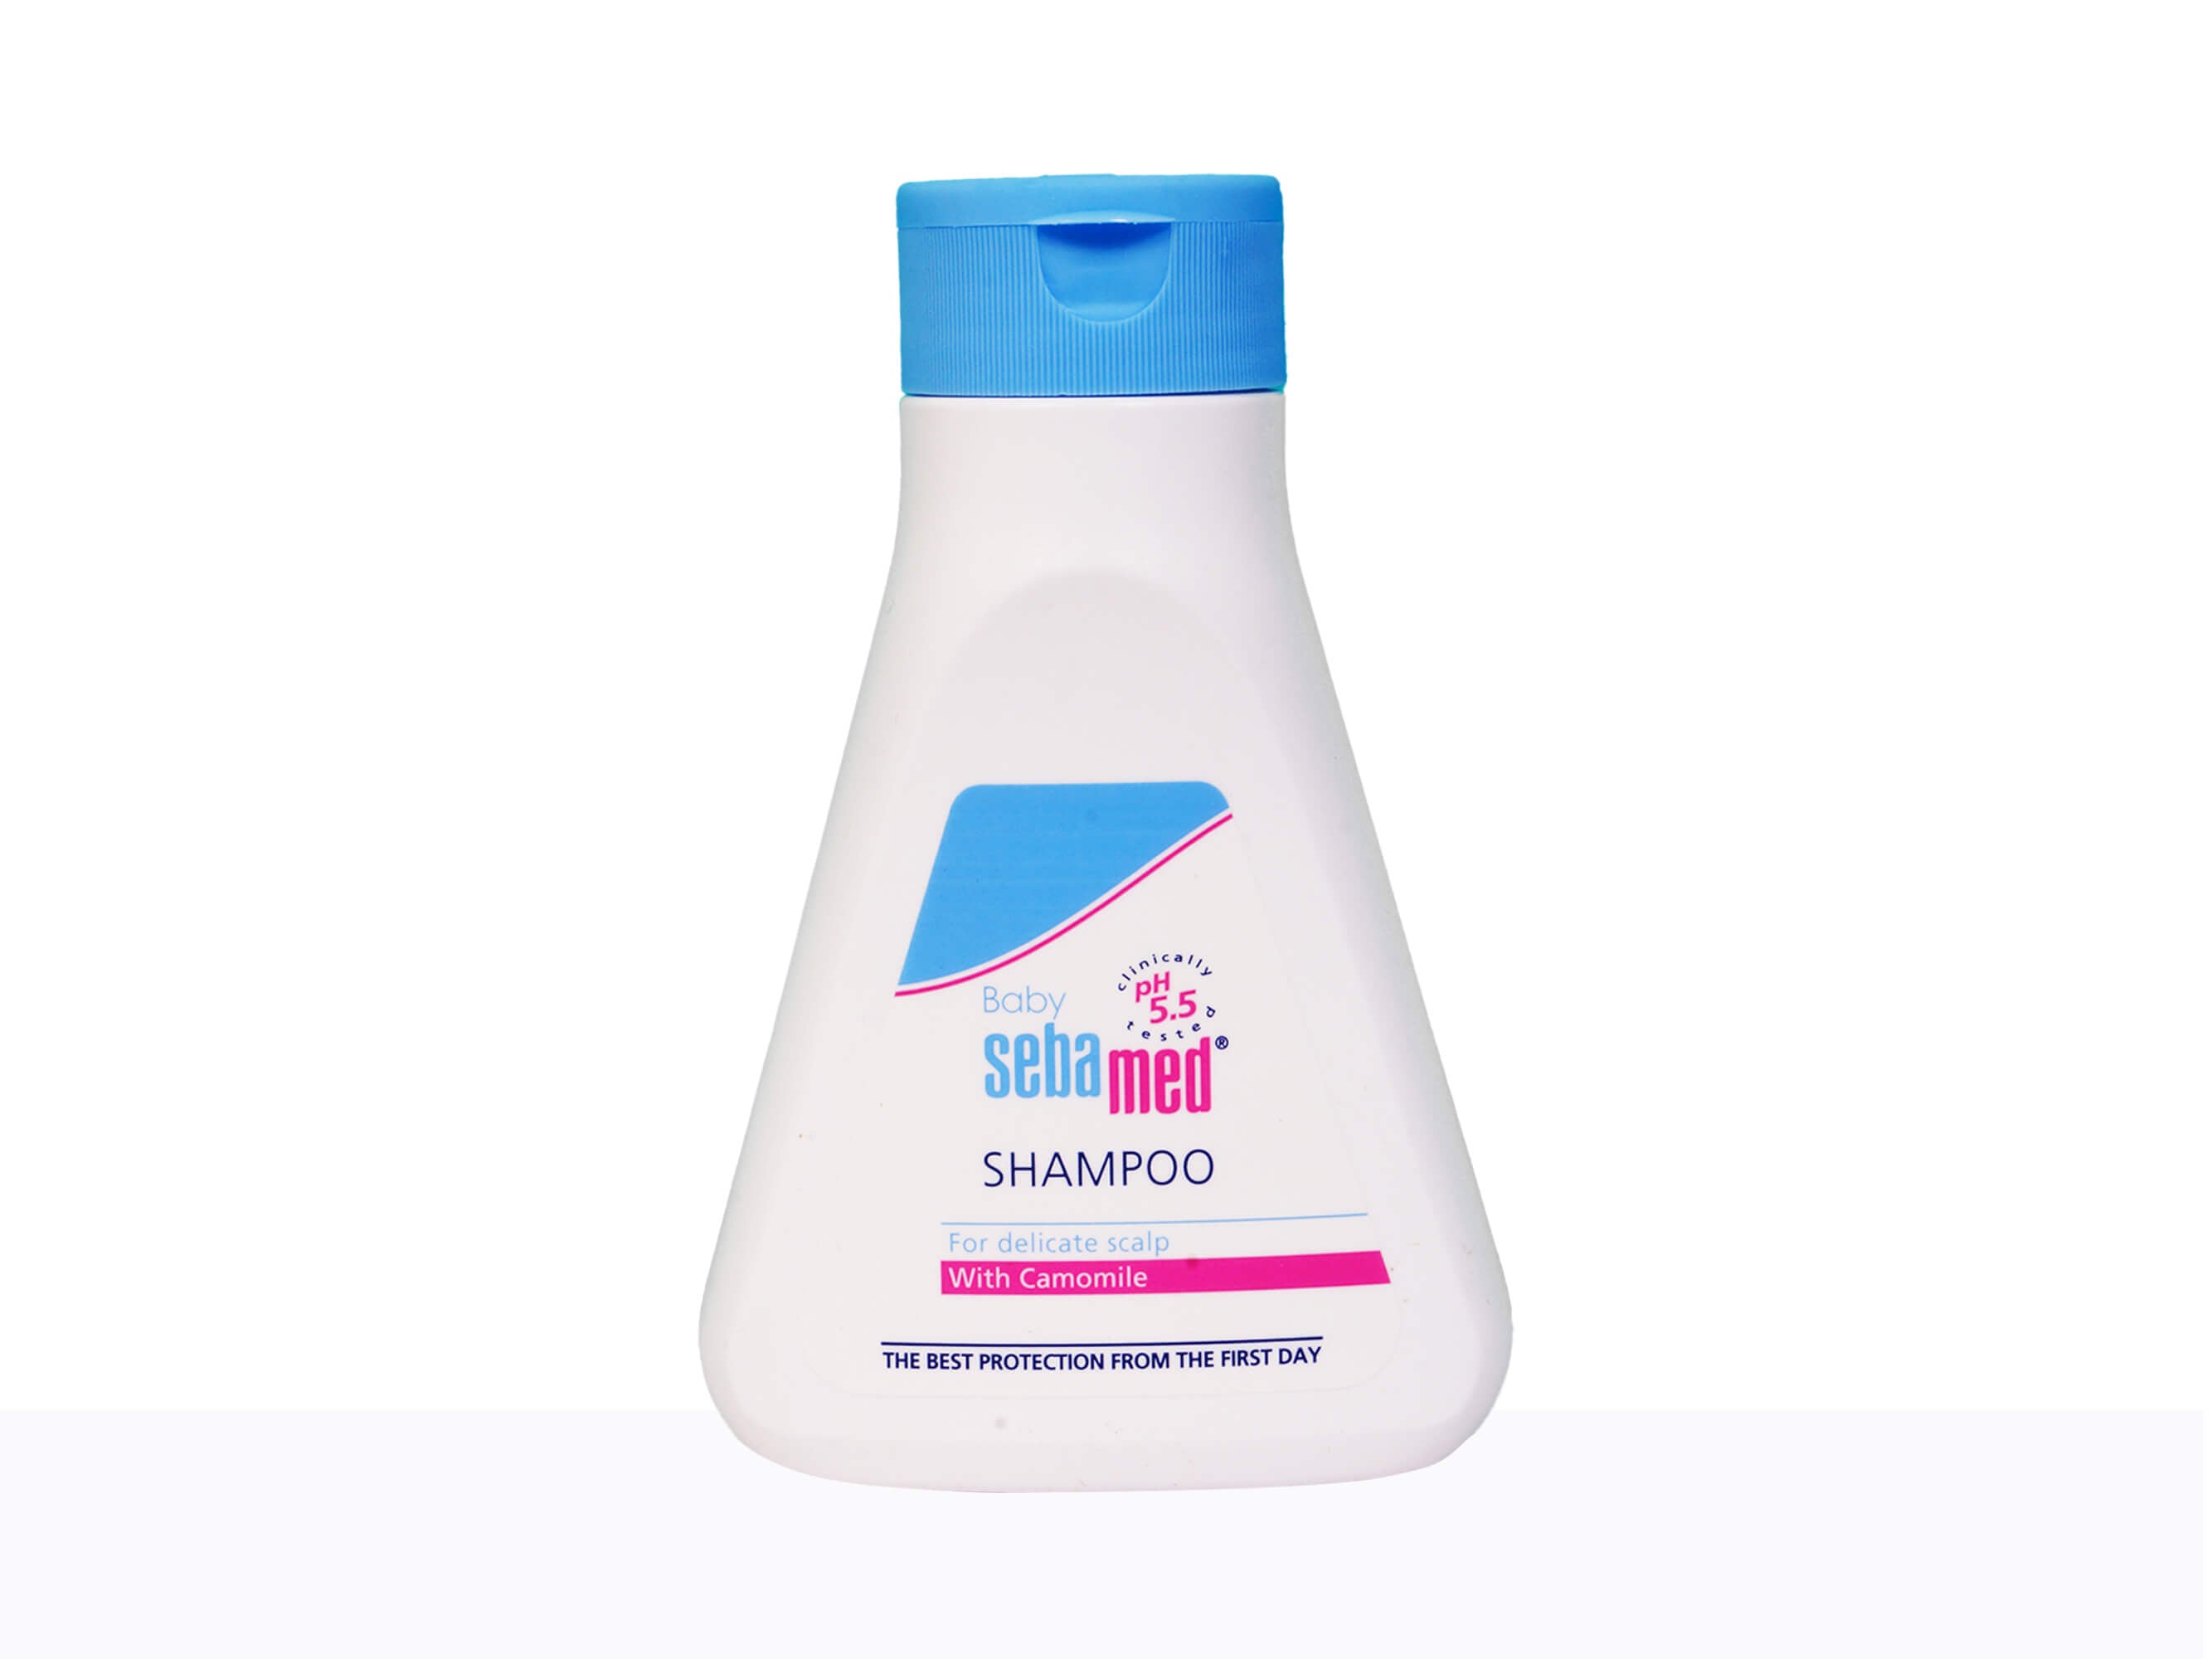 Sebamed Baby Shampoo For Delicate Scalp - Clinikally